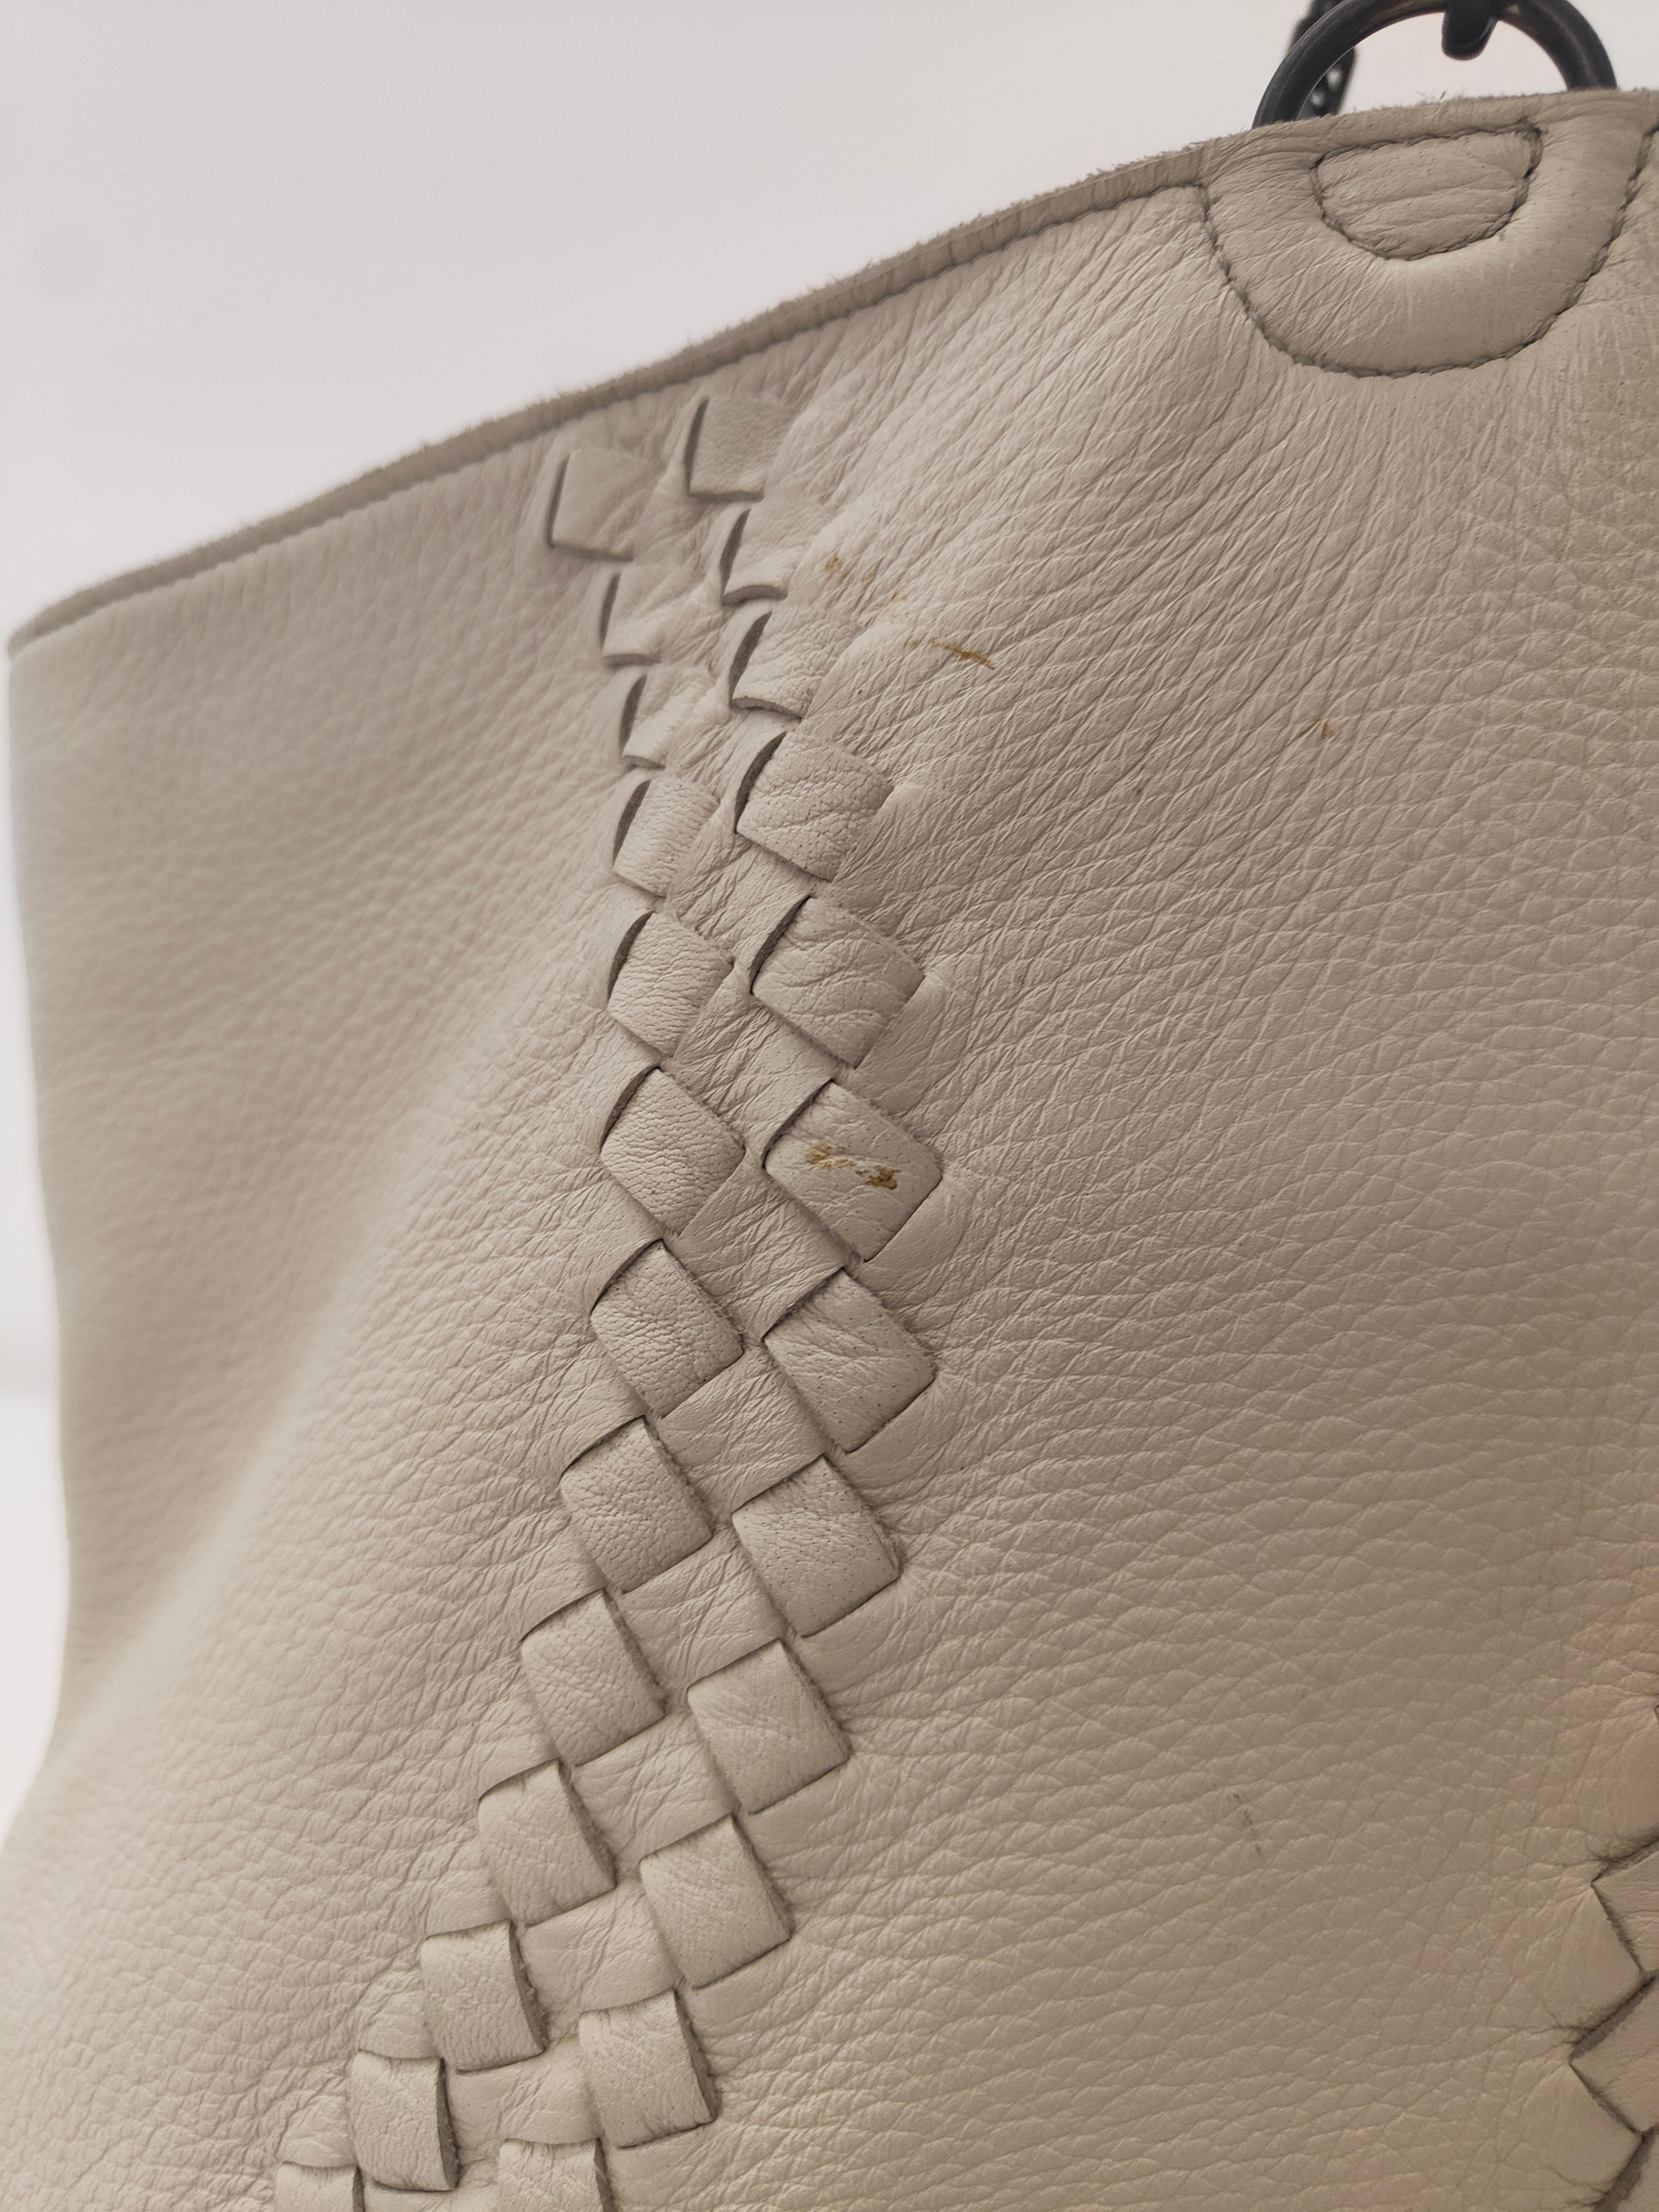 Bottega Veneta leather shoulder bag
53*33*18 cm